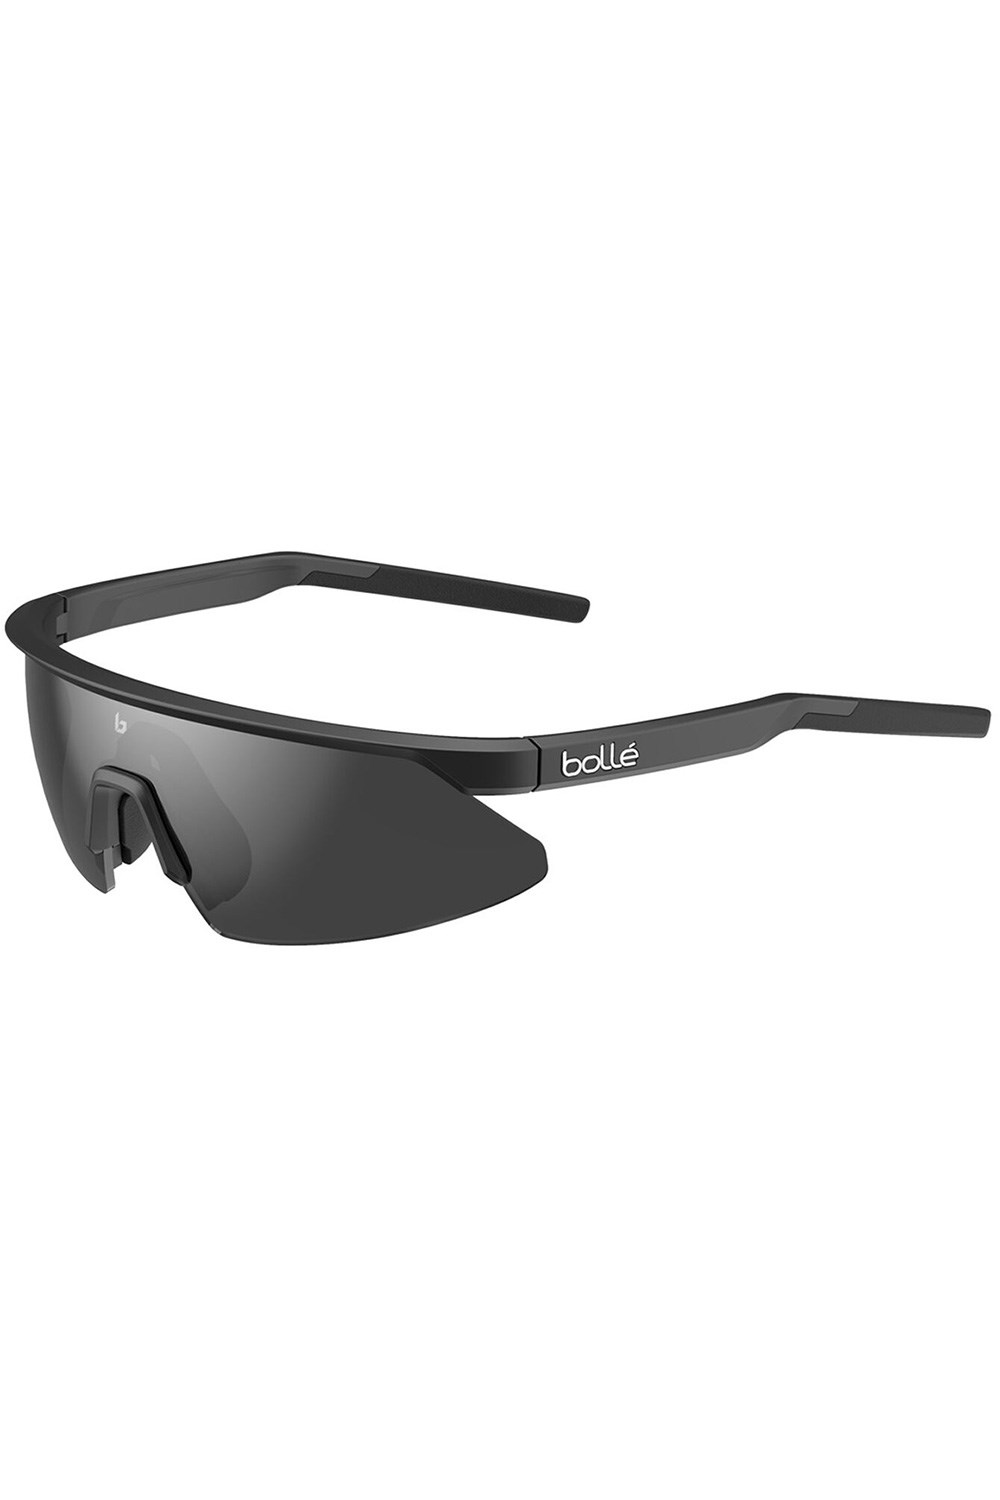 Micro Edge Unisex Cycling Sunglasses -